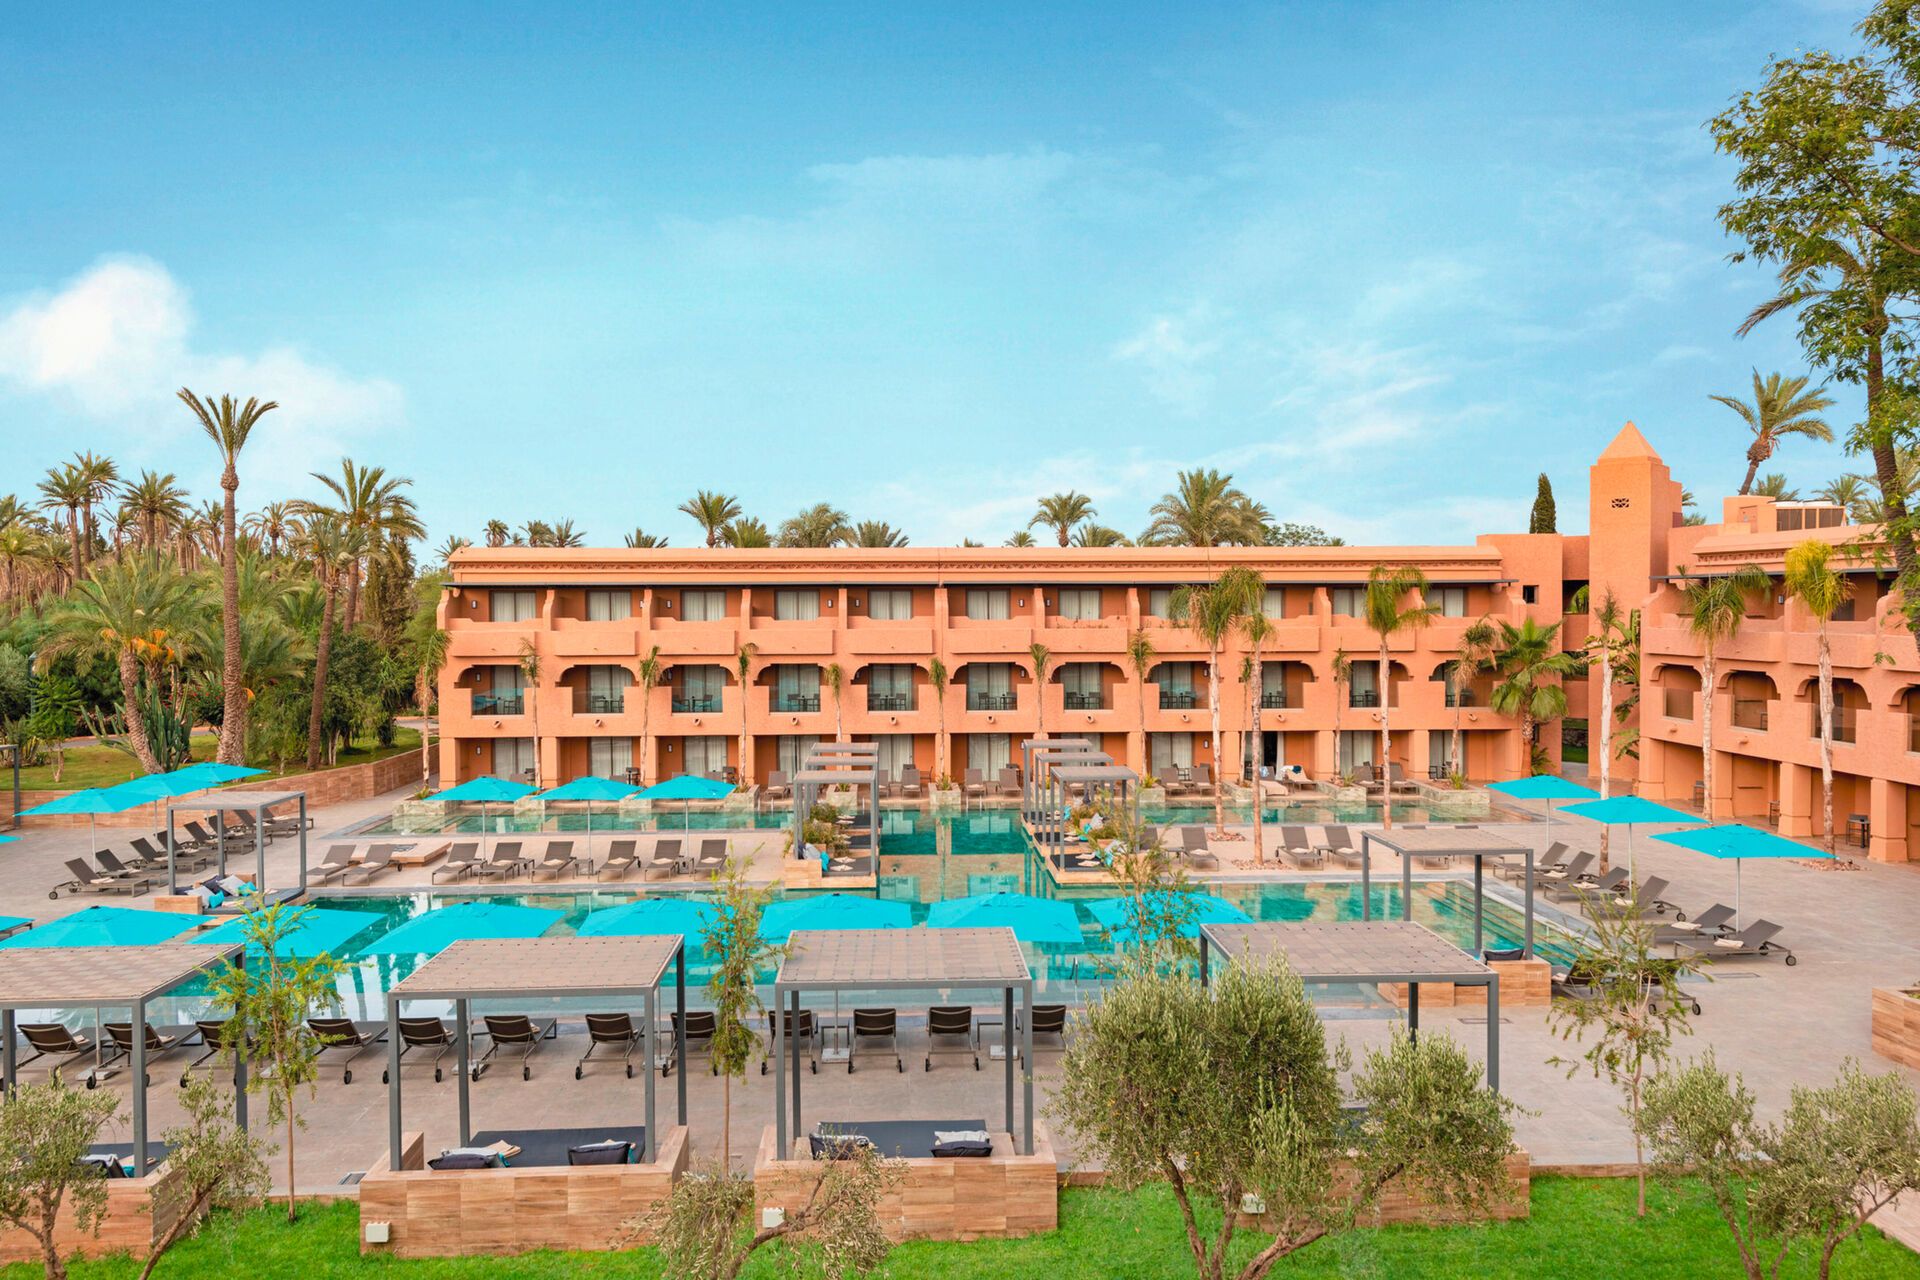 Maroc - Marrakech - Hotel Riu Tikida Garden 4* - Adult Only